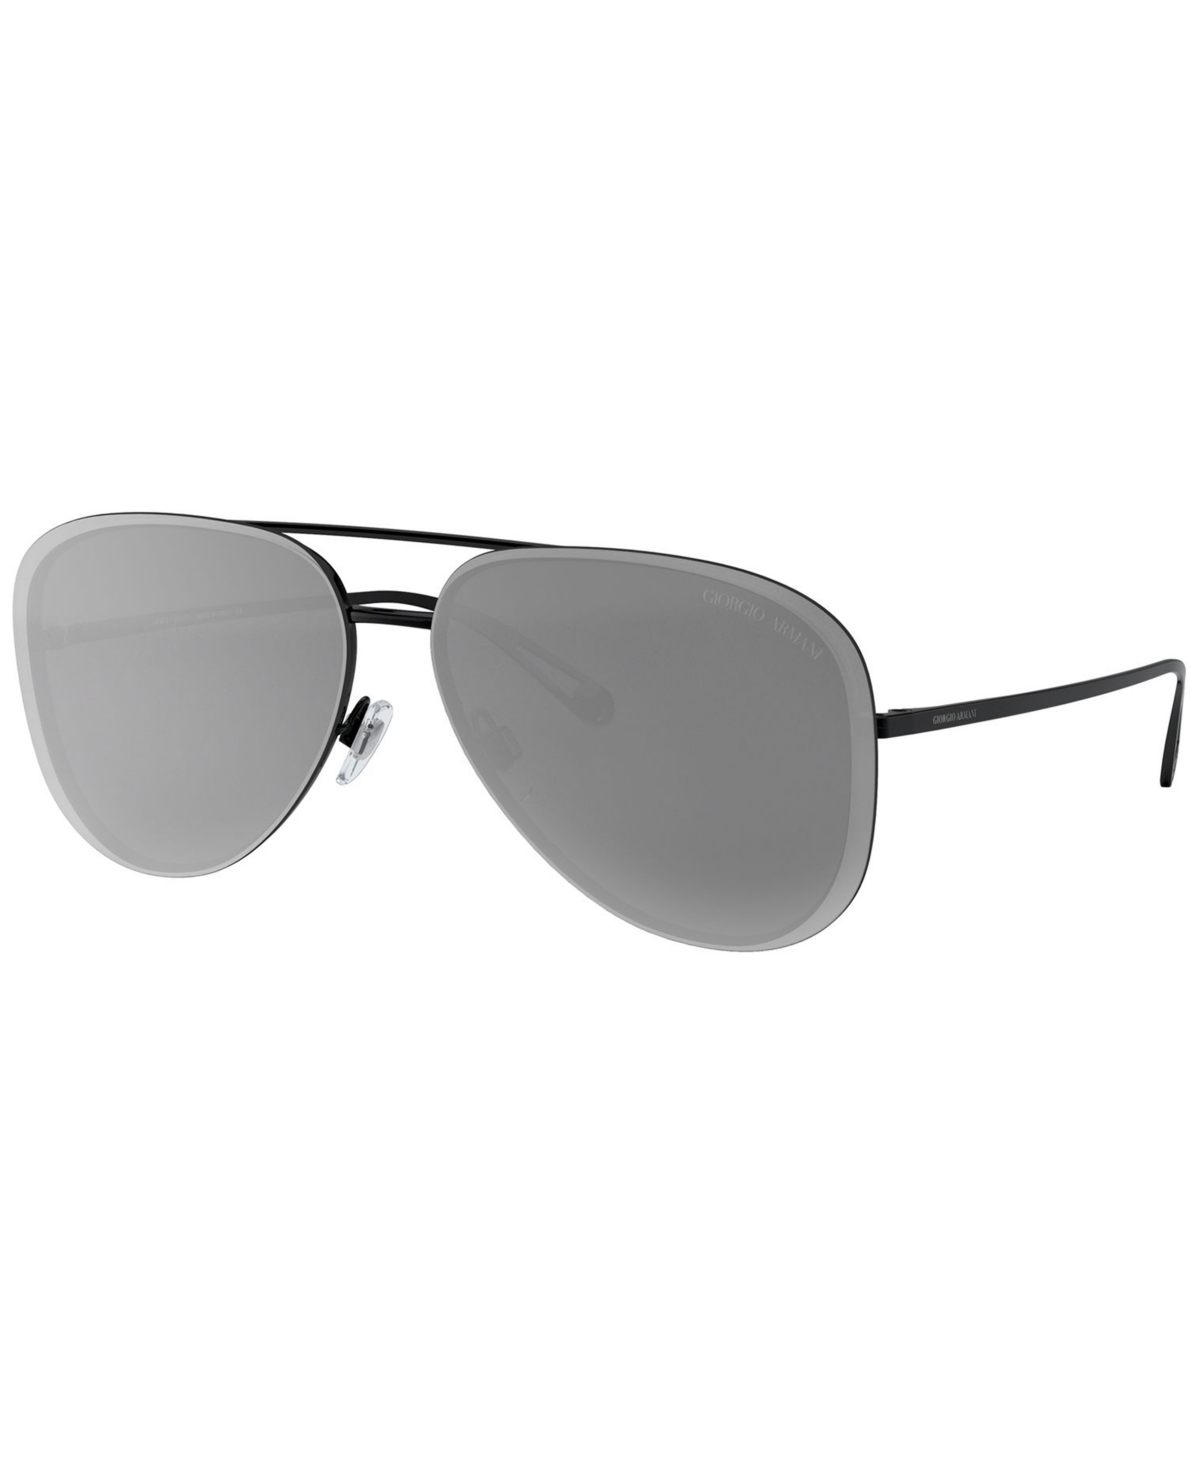 Sunglasses, AR6084 60 - BLACK/GREY MIRROR BLACK